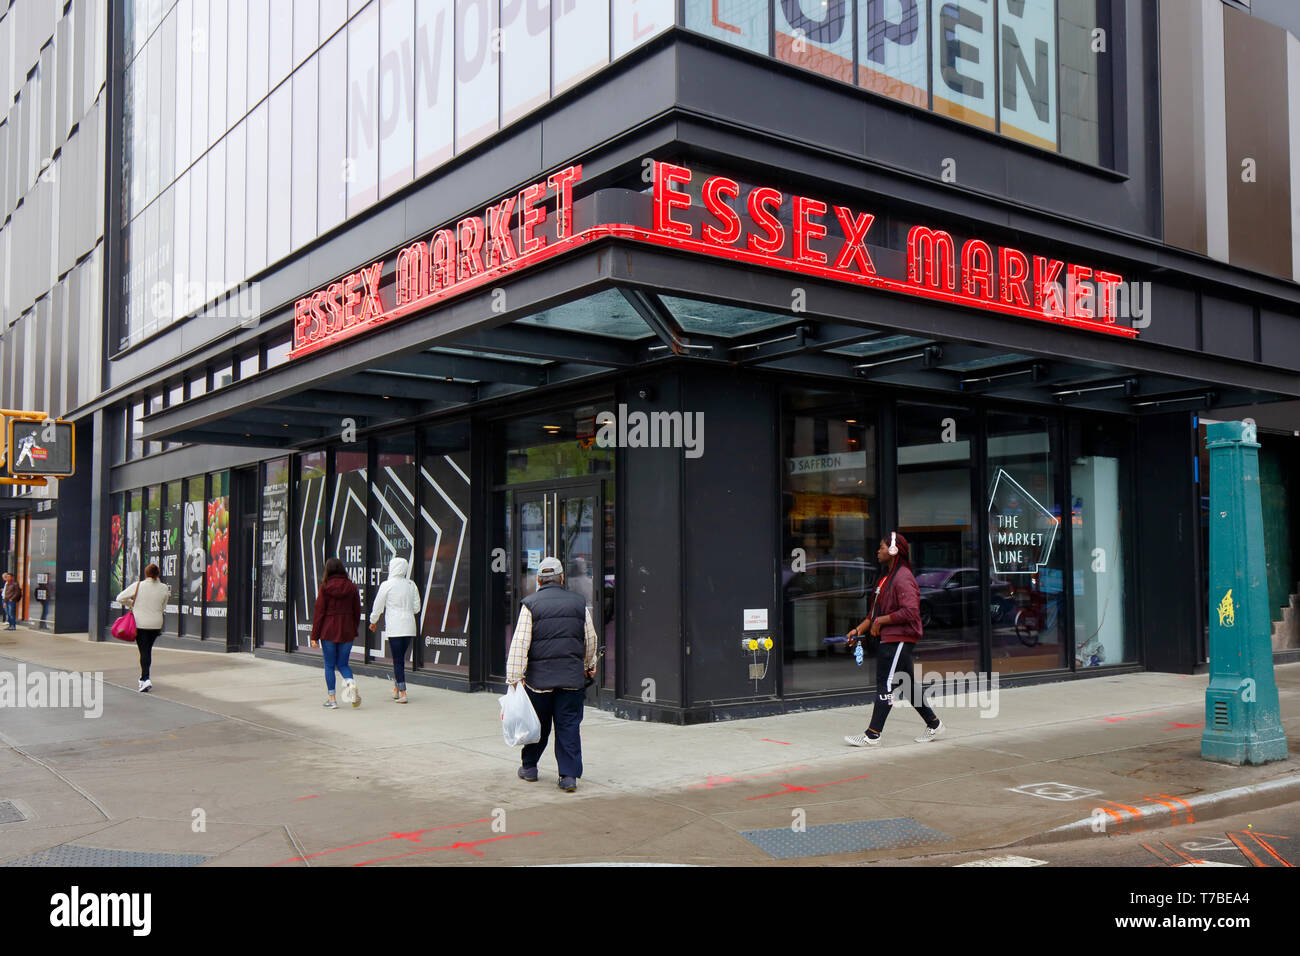 Essex Markt, Mai 2019. Lower East Side, New York City Stockfoto